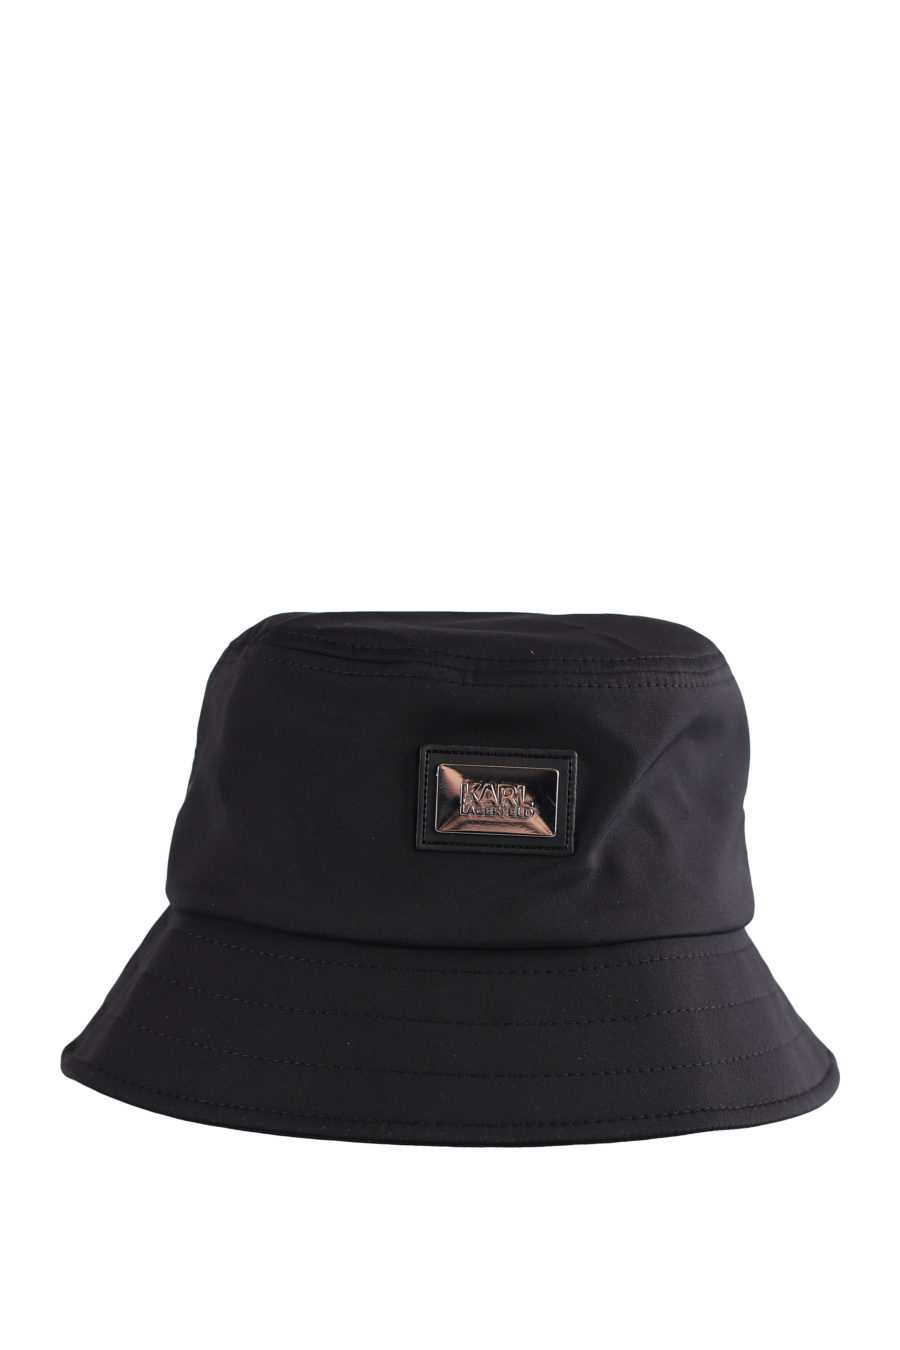 Sombrero de pescador negro con logotipo en placa plateada - IMG 9606